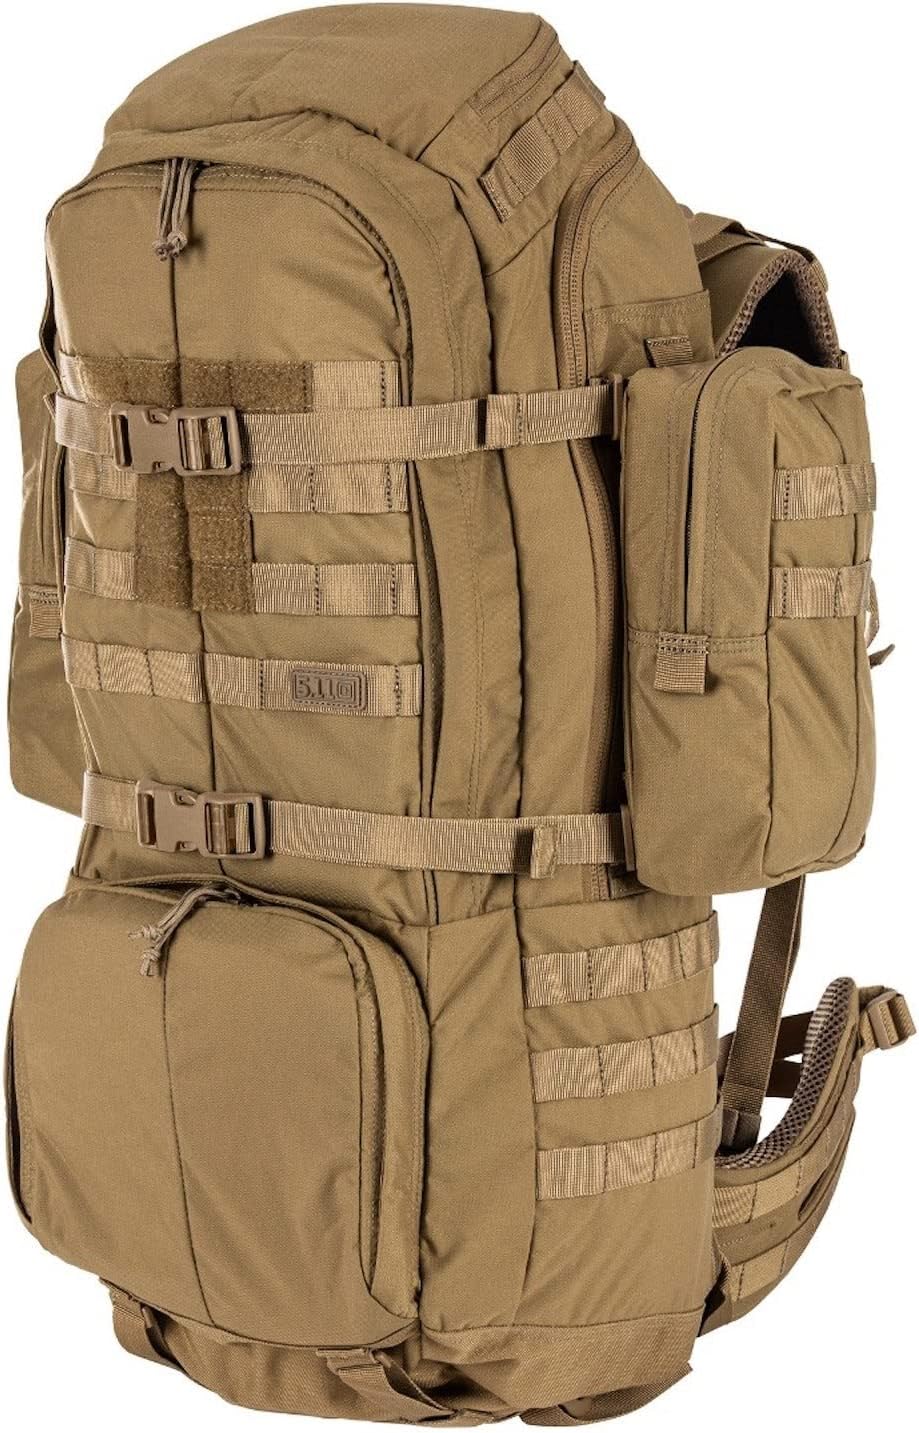 5.11 Military RUSH100 Backpack